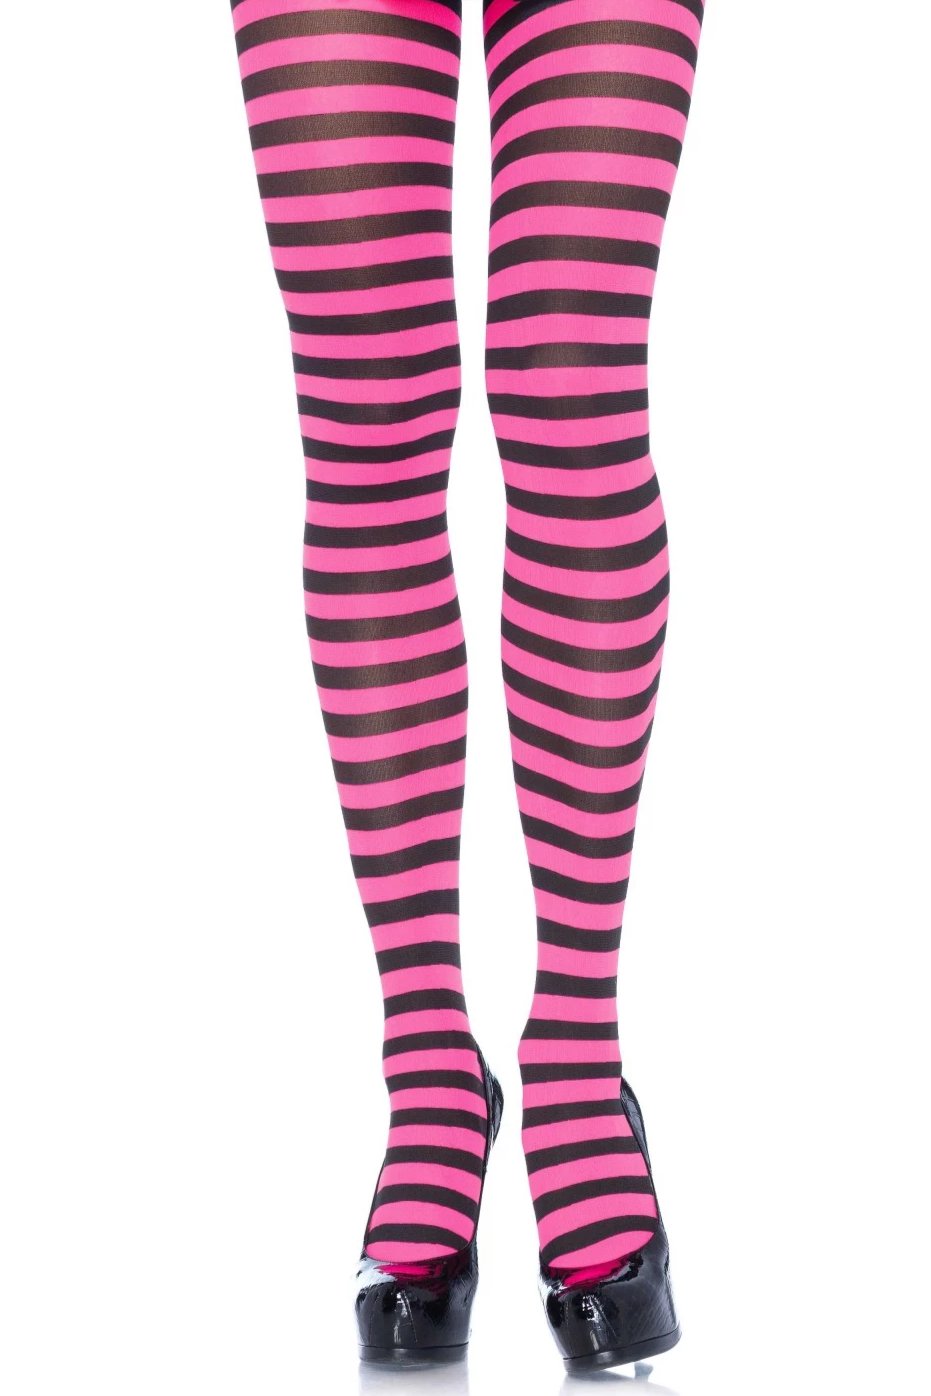 Leg Avenue 7100 Nylon Stripe Tights - pink and black horizontal striped pantyhose